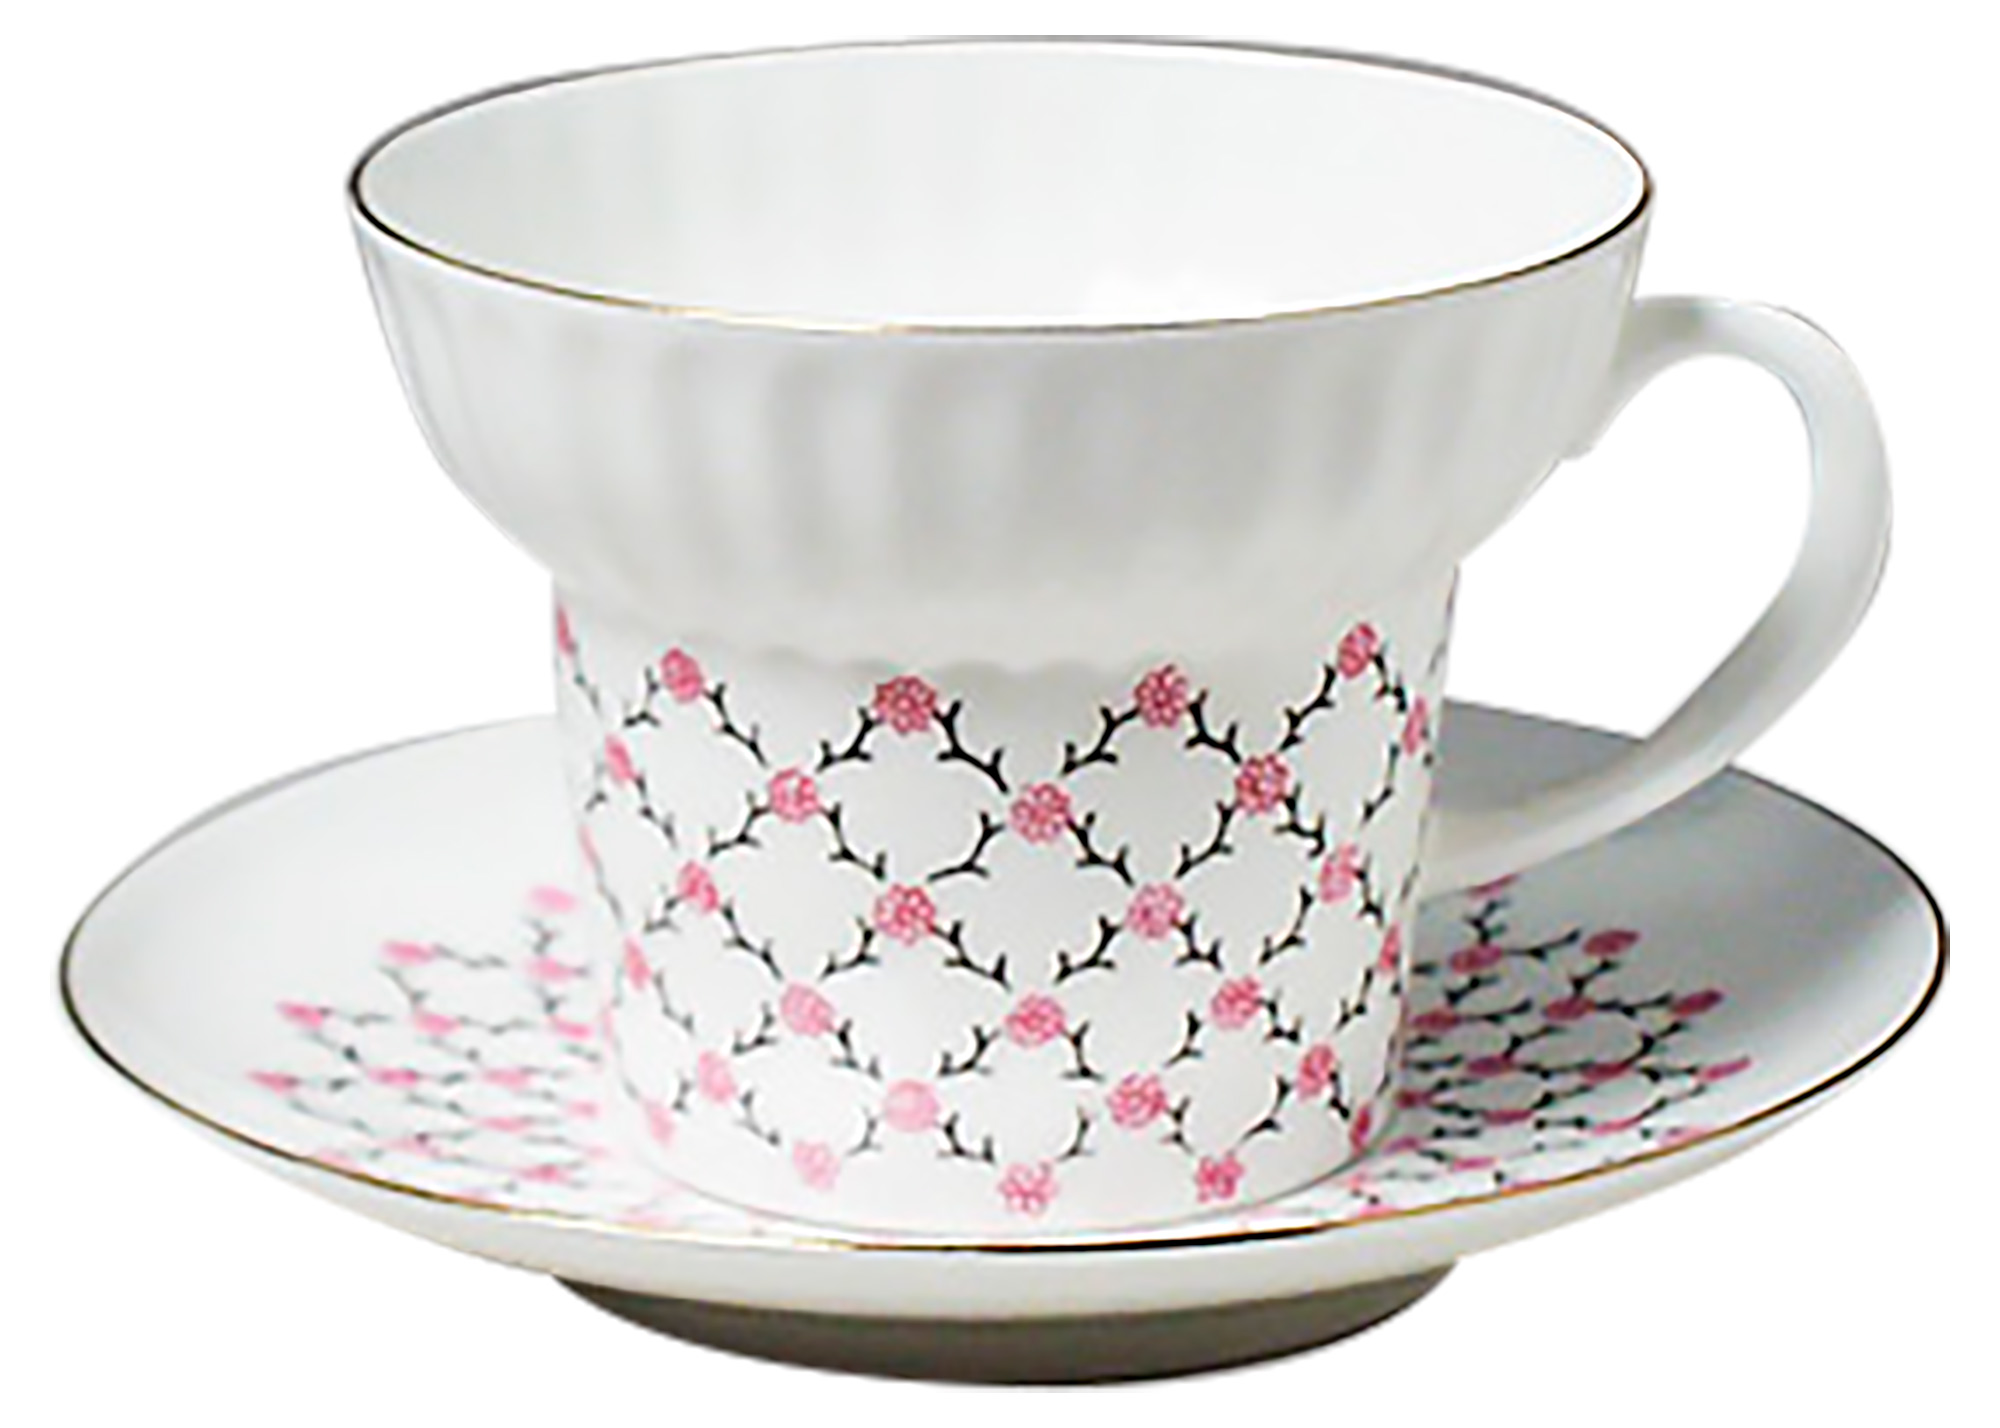 Buy Pink Net Cup and Saucer, Bone China at GoldenCockerel.com